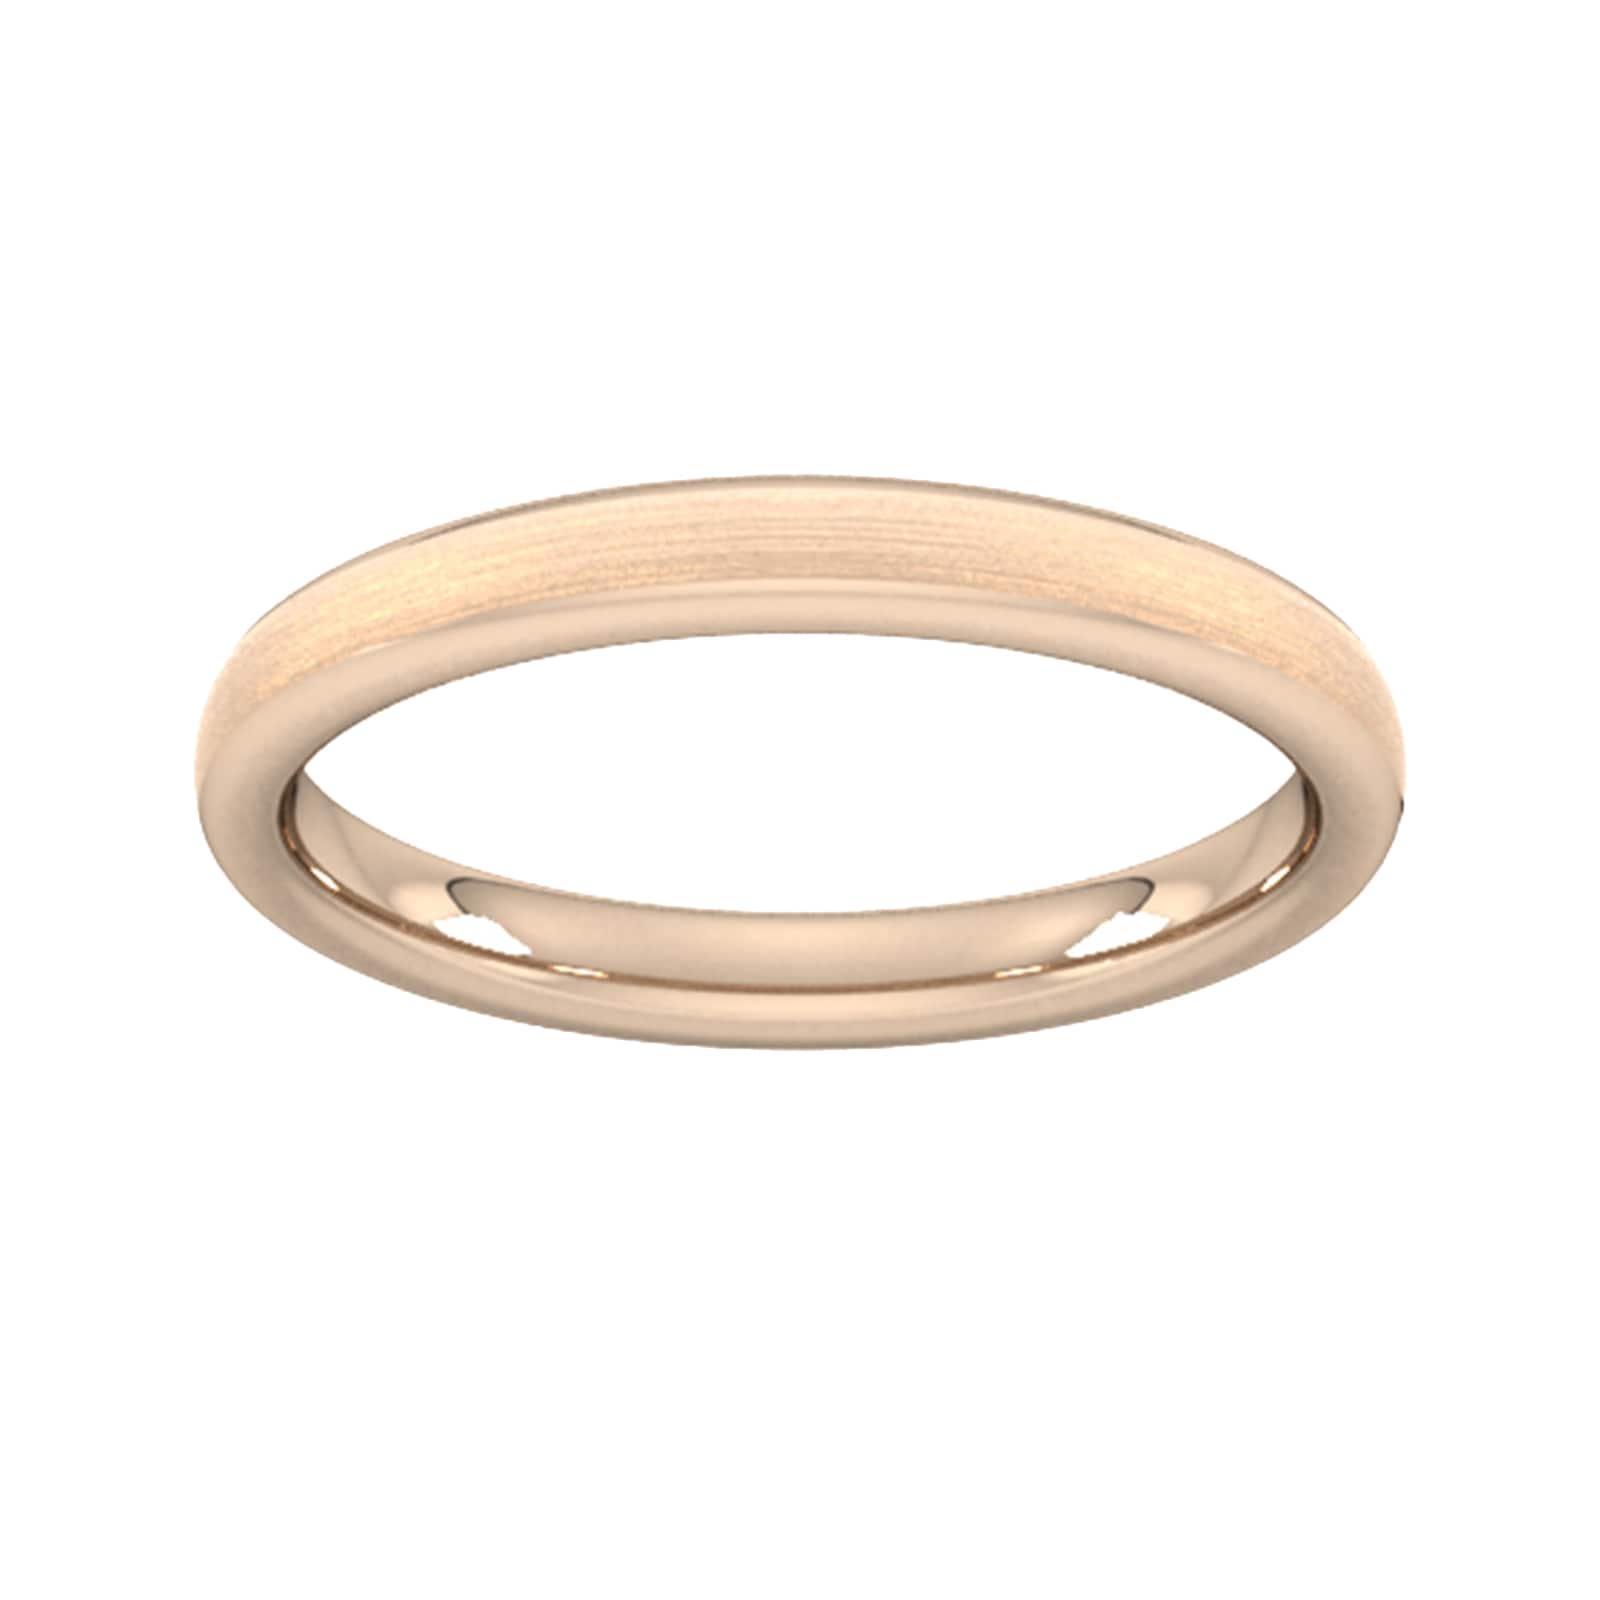 2.5mm Slight Court Heavy Matt Finished Wedding Ring In 9 Carat Rose Gold - Ring Size M